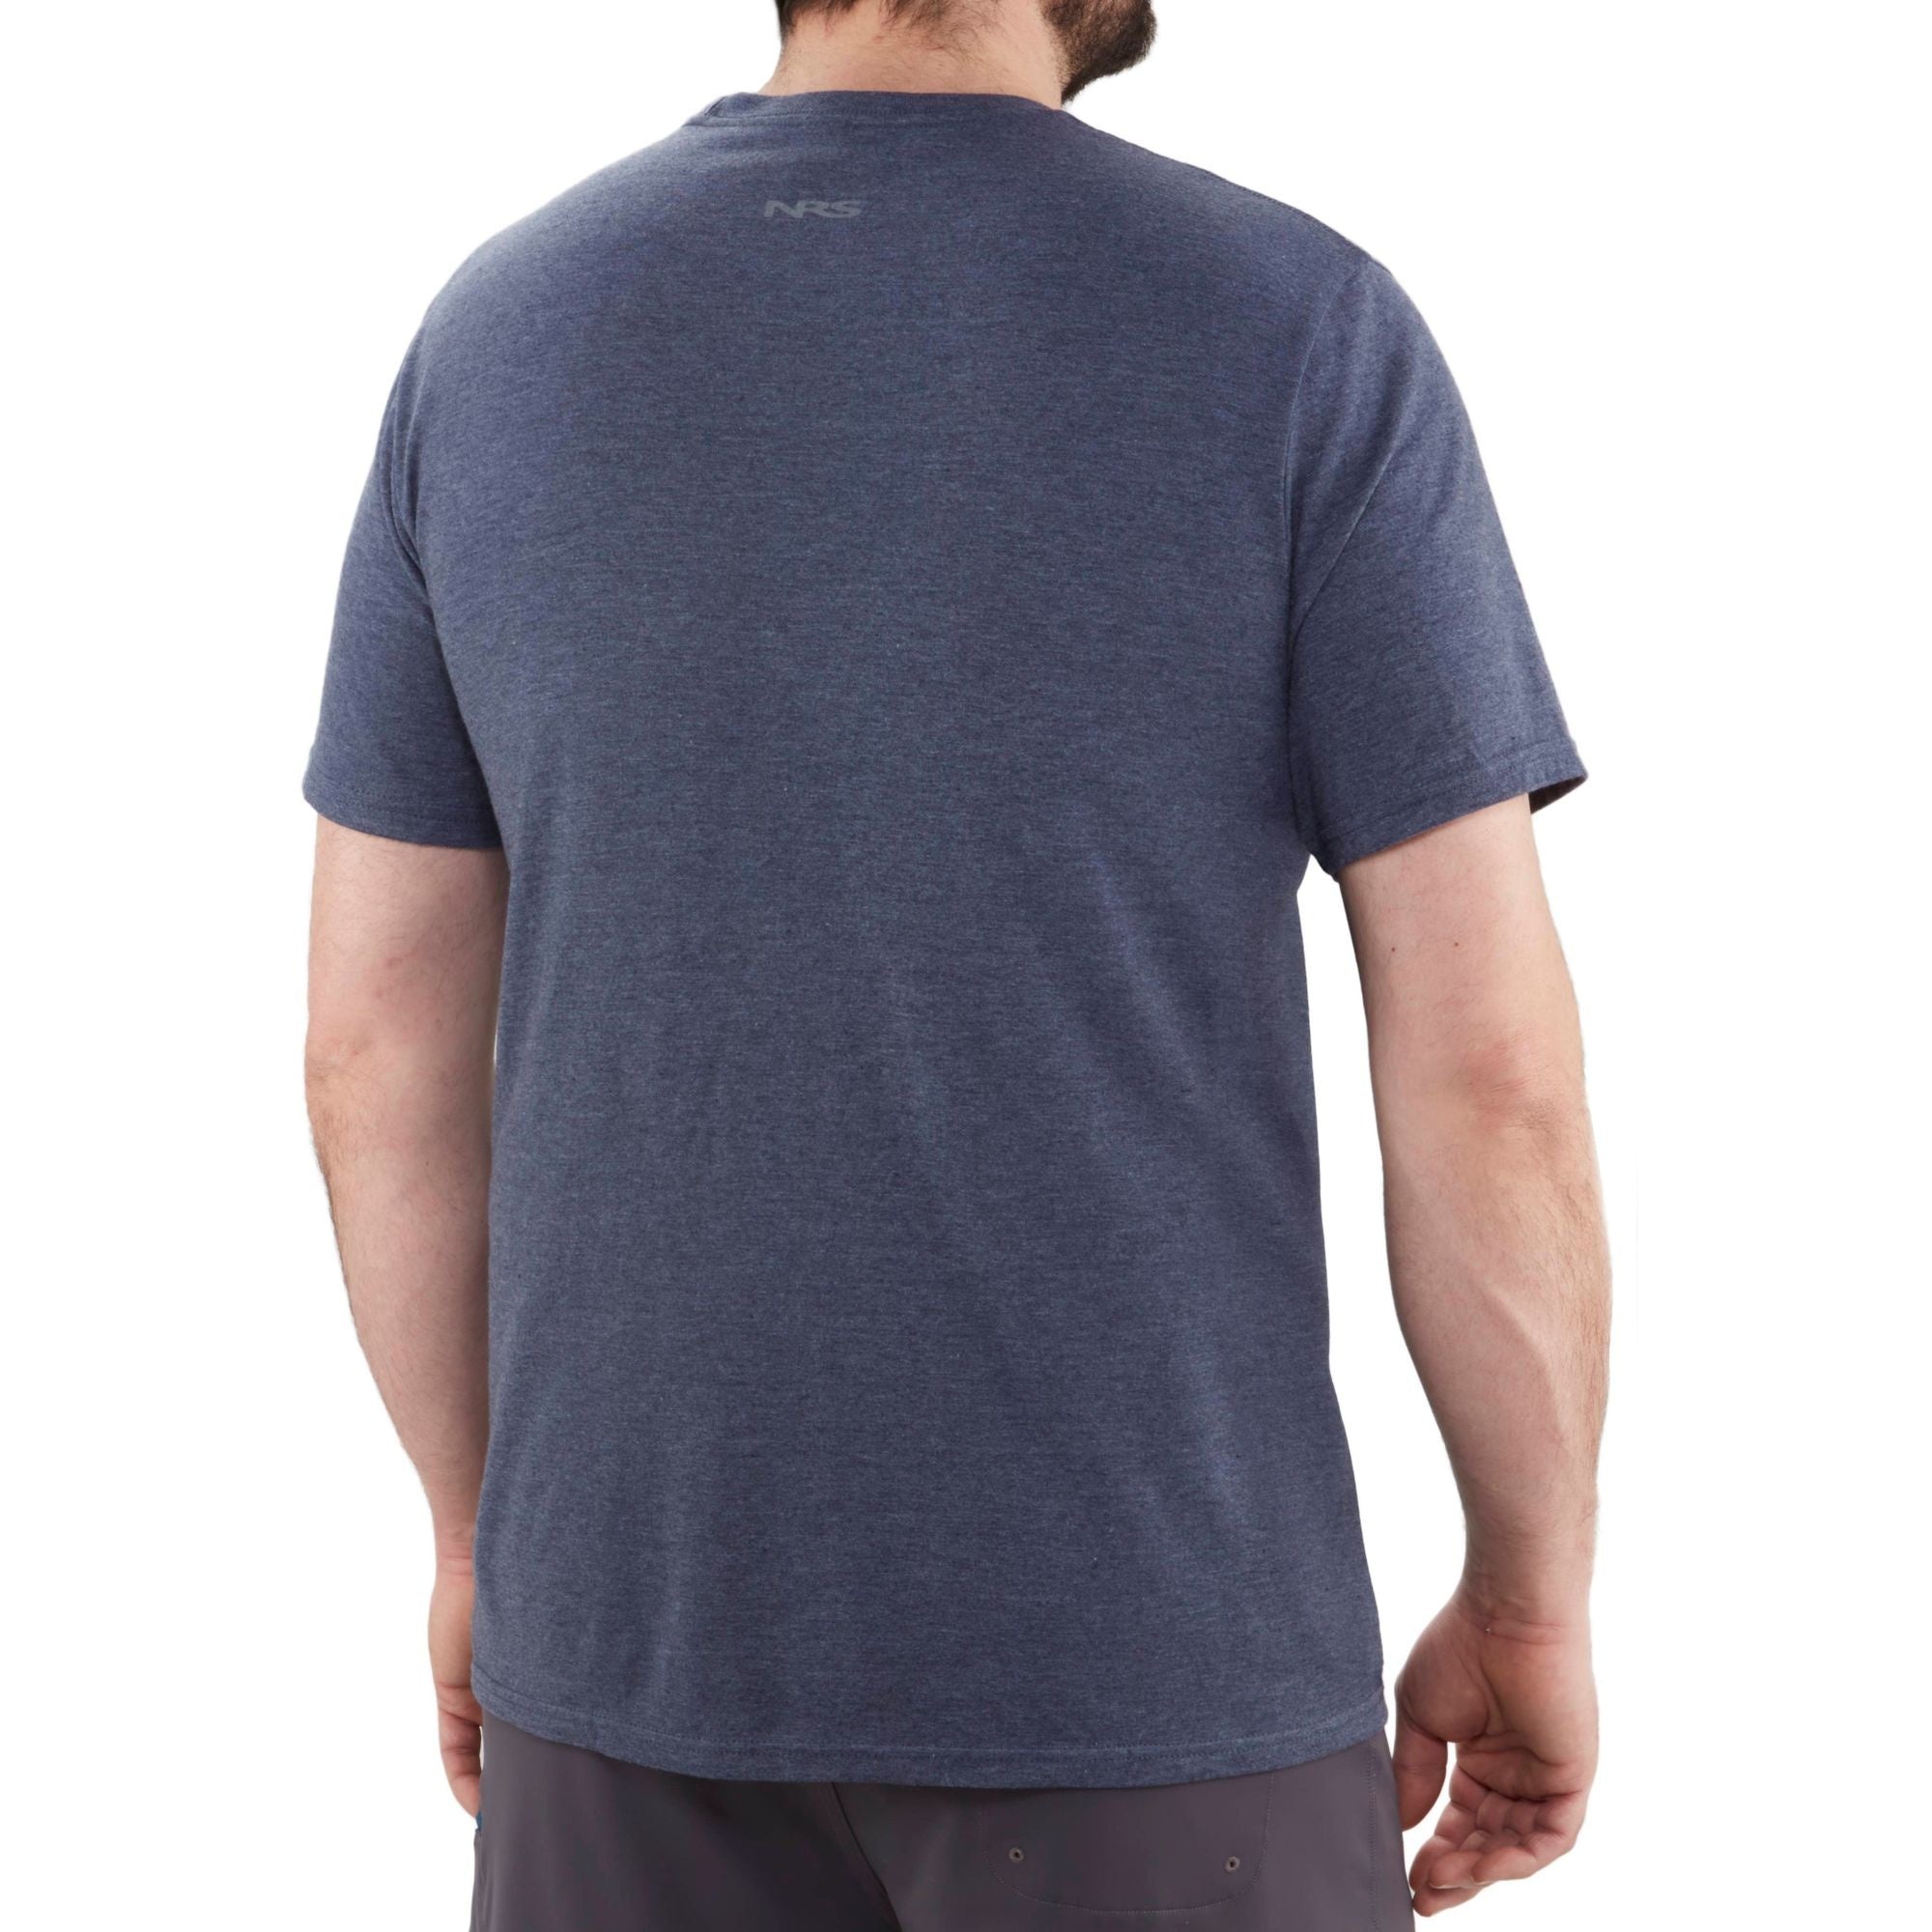 NRS - Men's Find Your Line T-Shirt